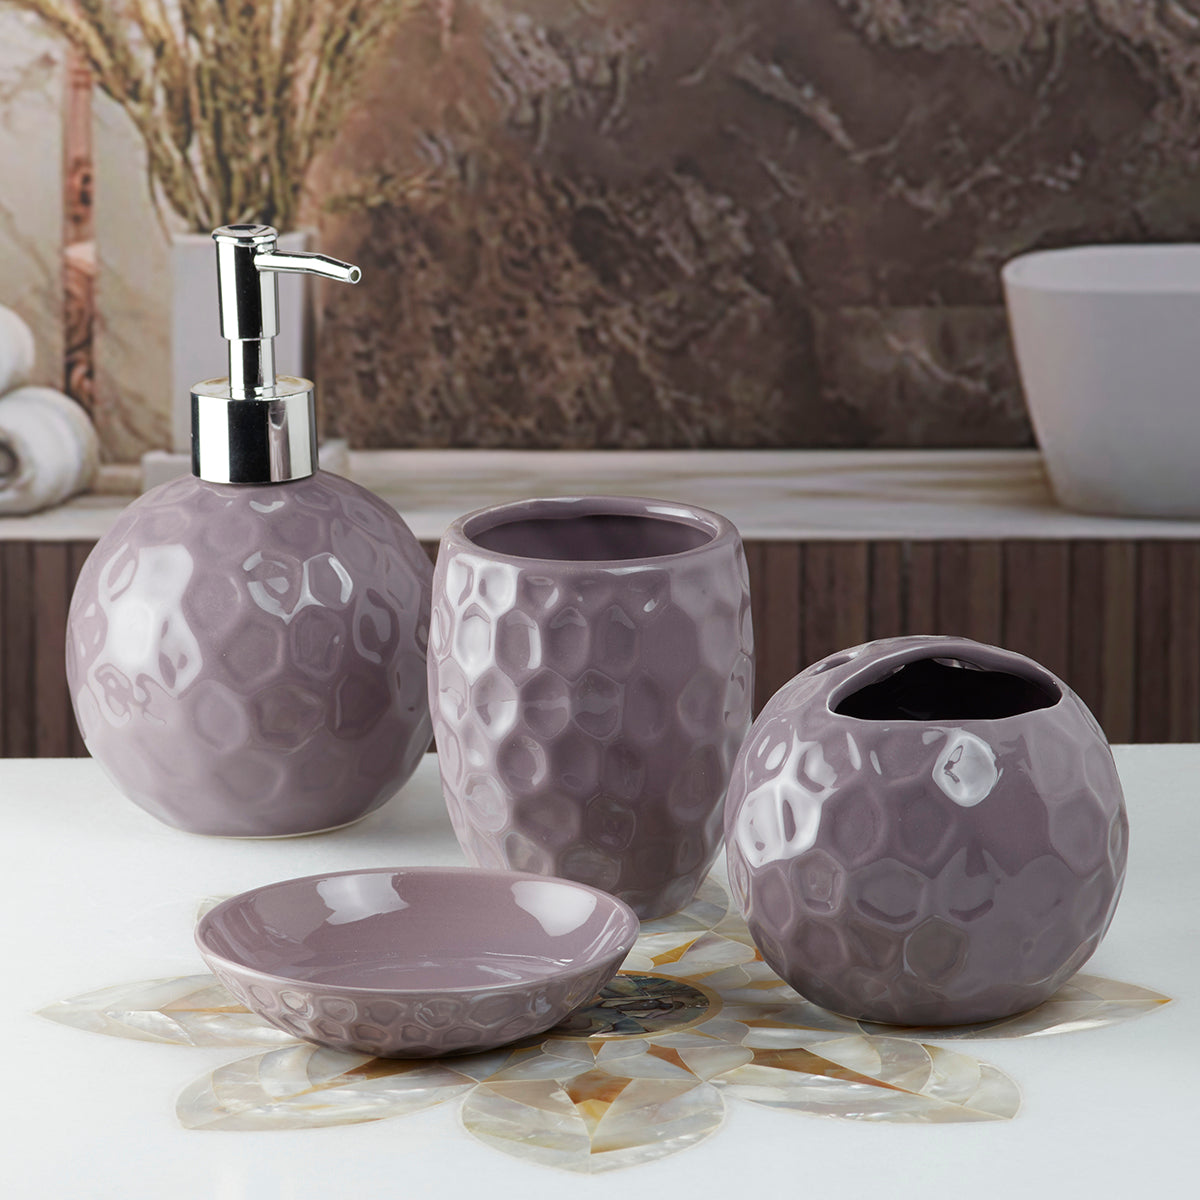 Ceramic Bathroom Accessories Set of 4 Bath Set with Soap Dispenser (8204)